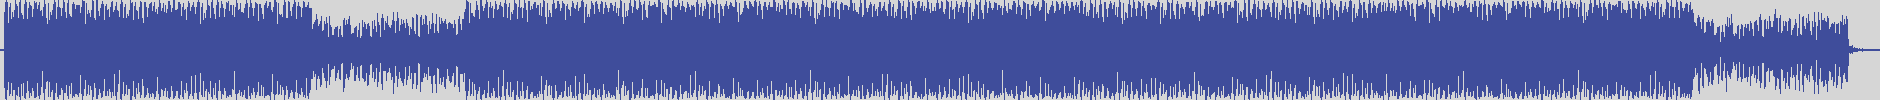 nf_boyz_records [NFY003] Many Polly - Bionic Man [Piano Mix] audio wave form